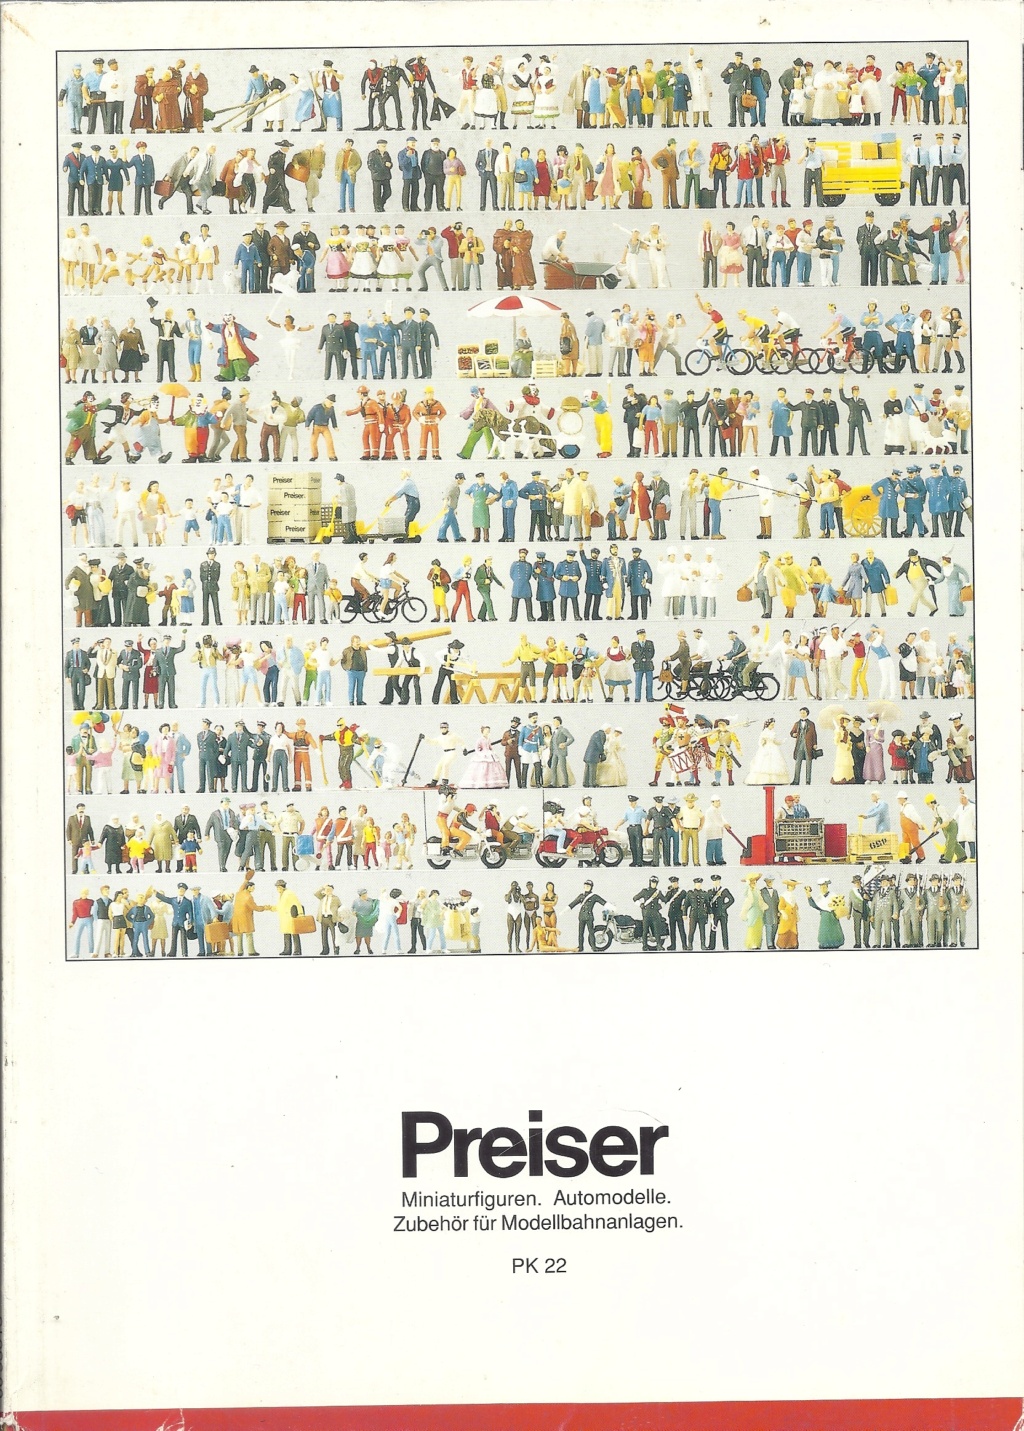 preiser - [PREISER 1996] Catalogue K22 1996 Preis891